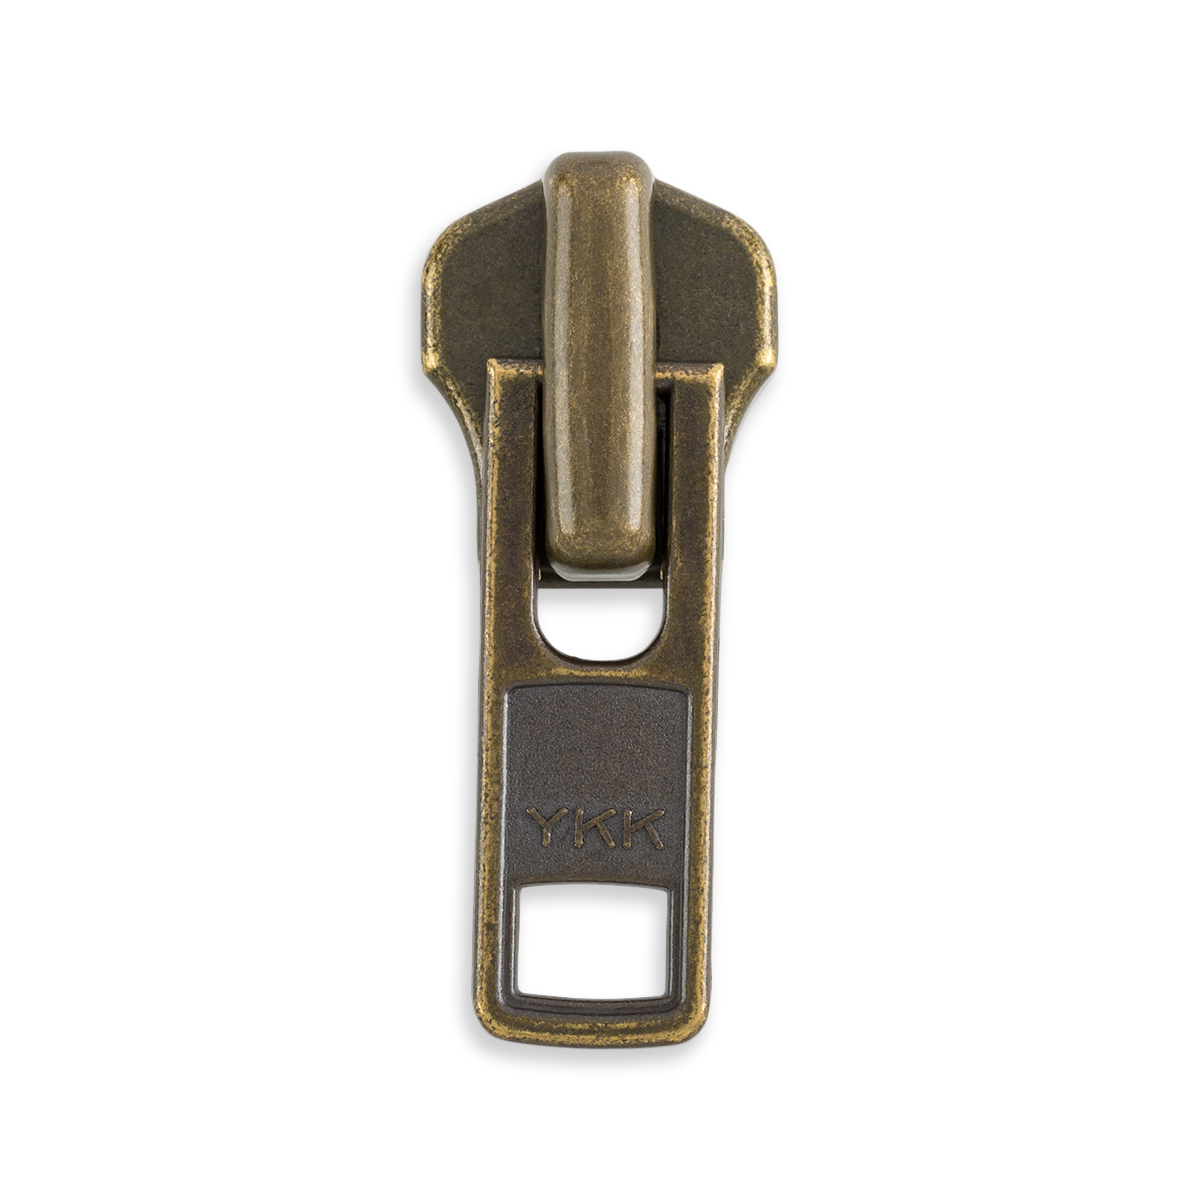 One enjoy Zipper Pull Tab Replacement Metal Zipper Handle Mend